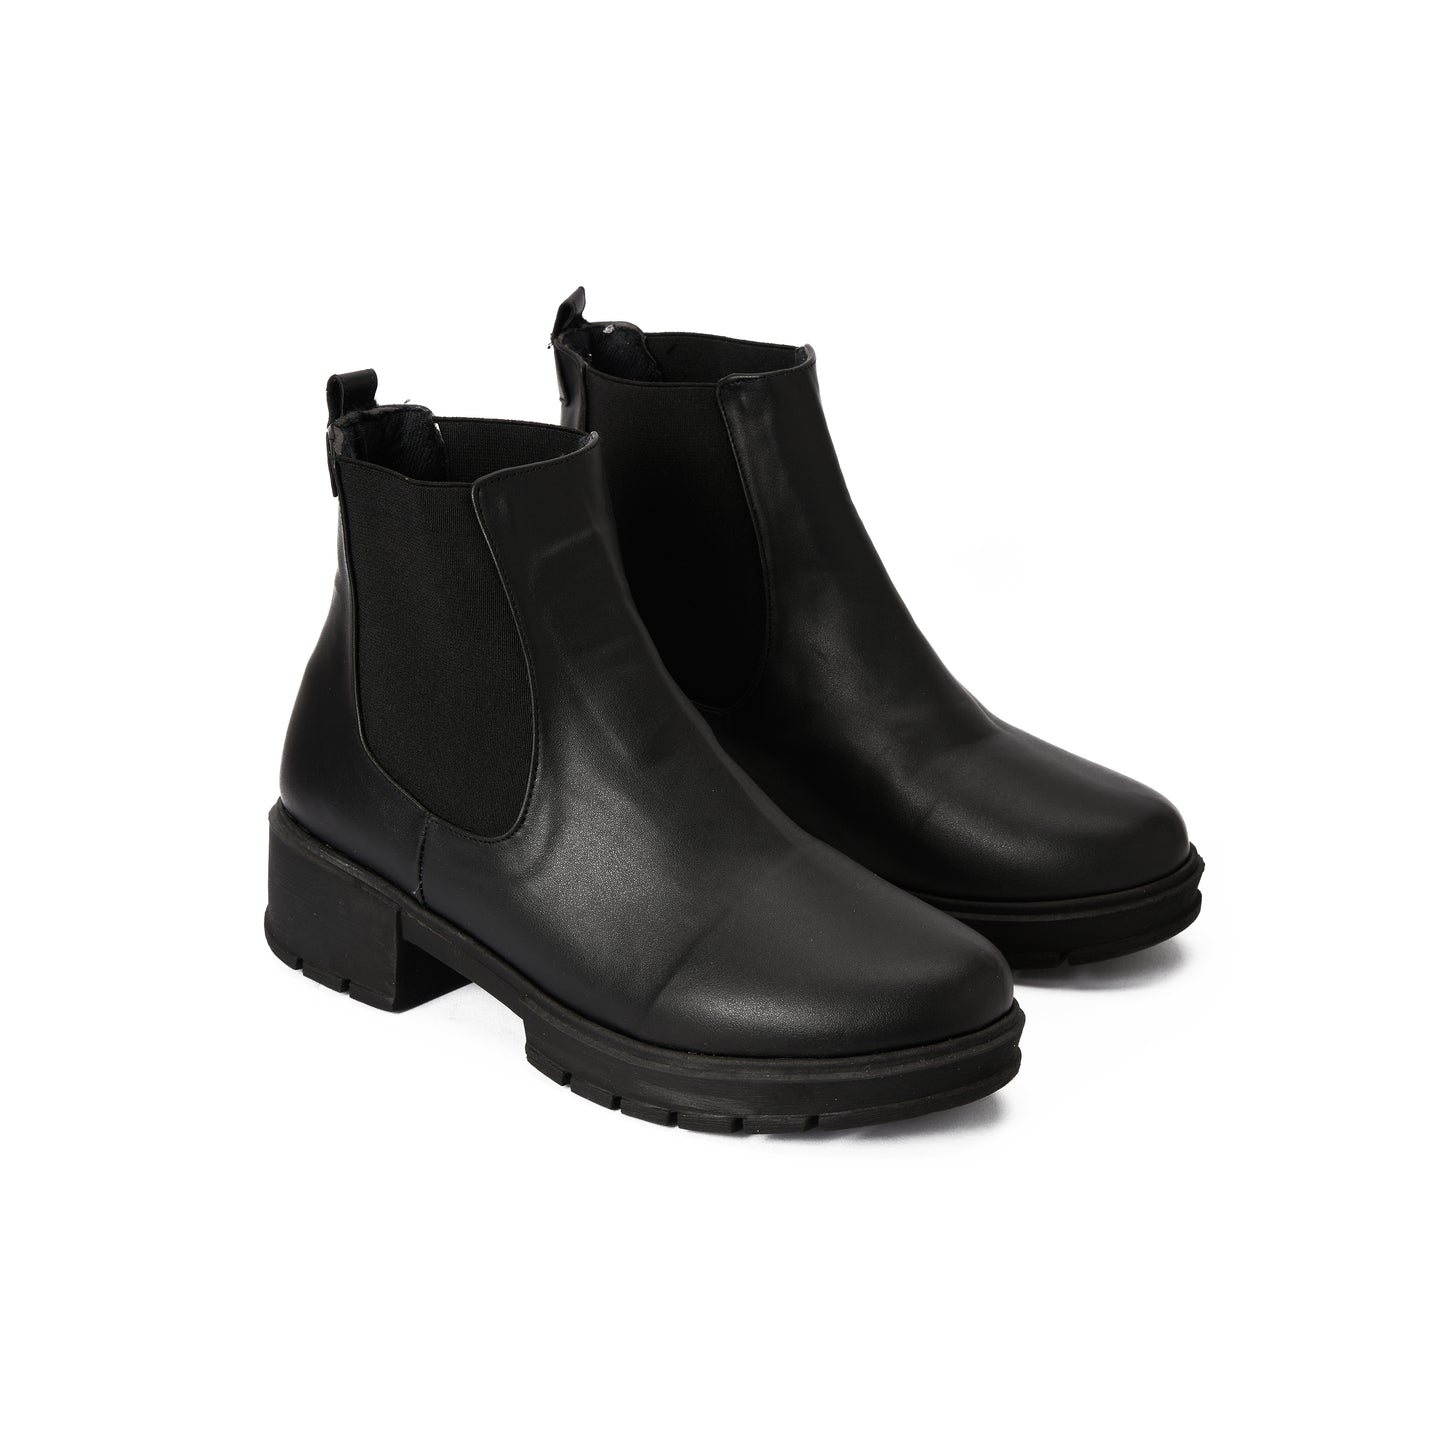 Black Flake boots